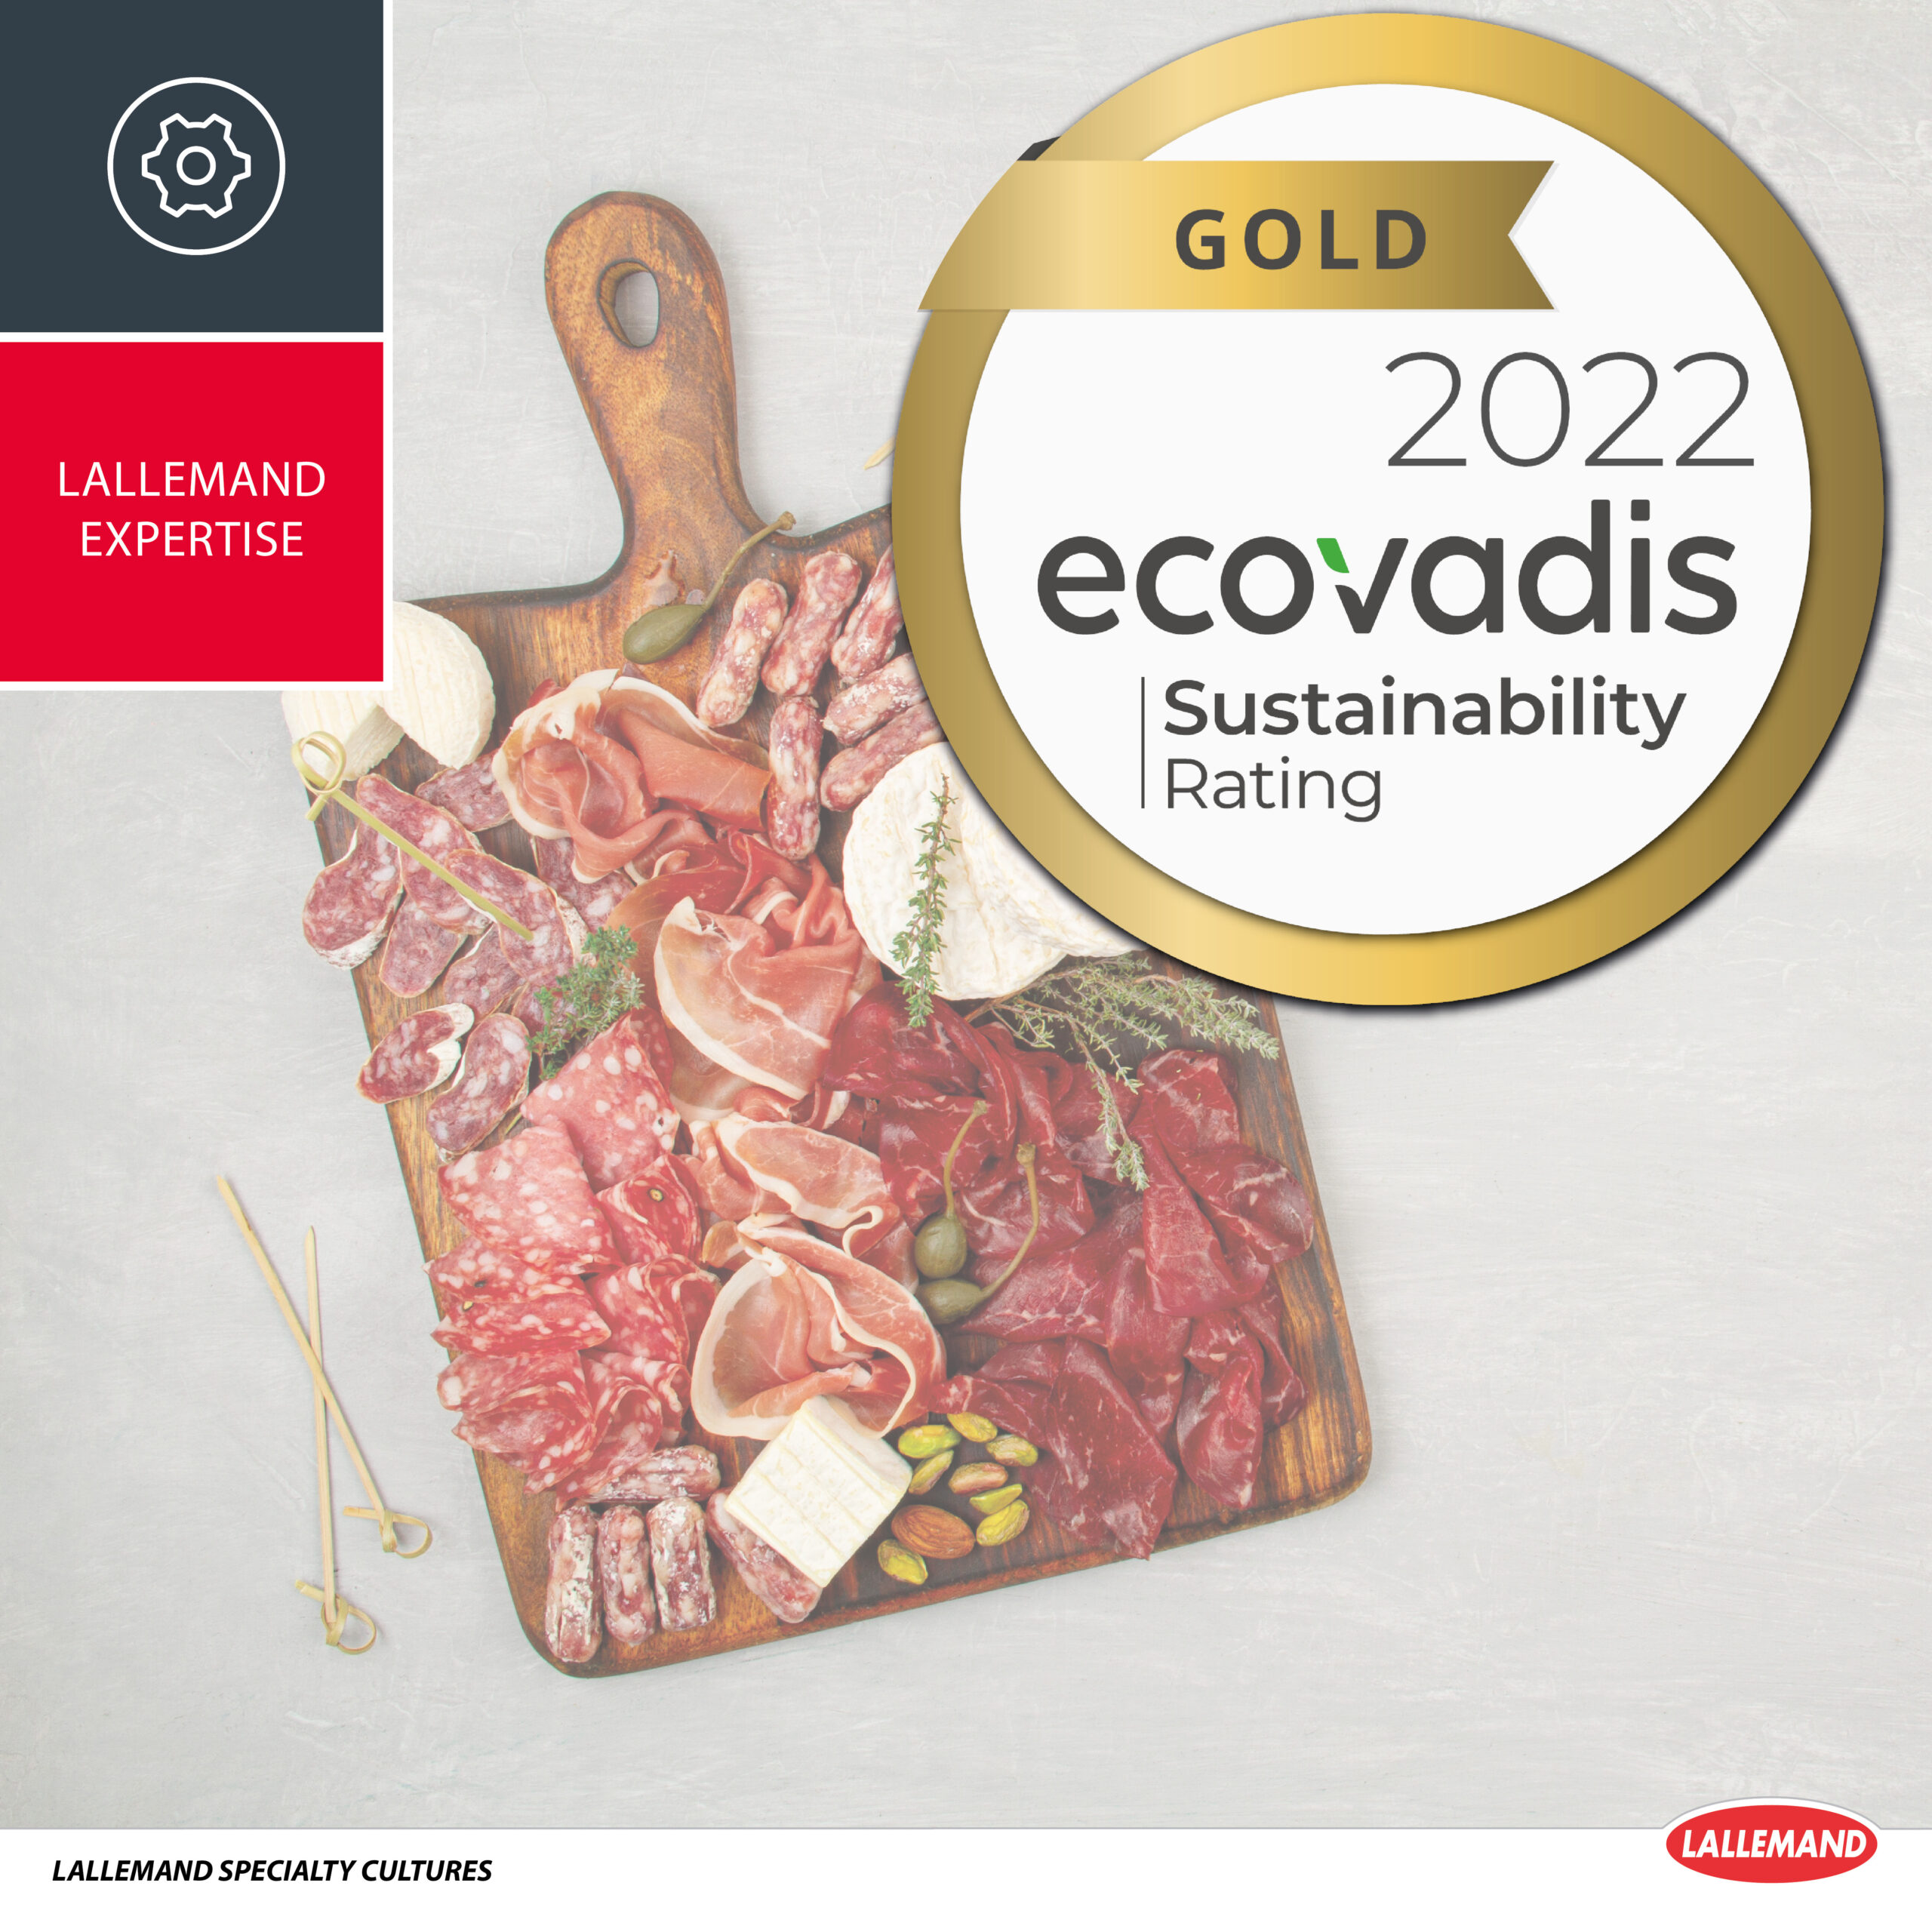 “Gold” EcoVadis Medal